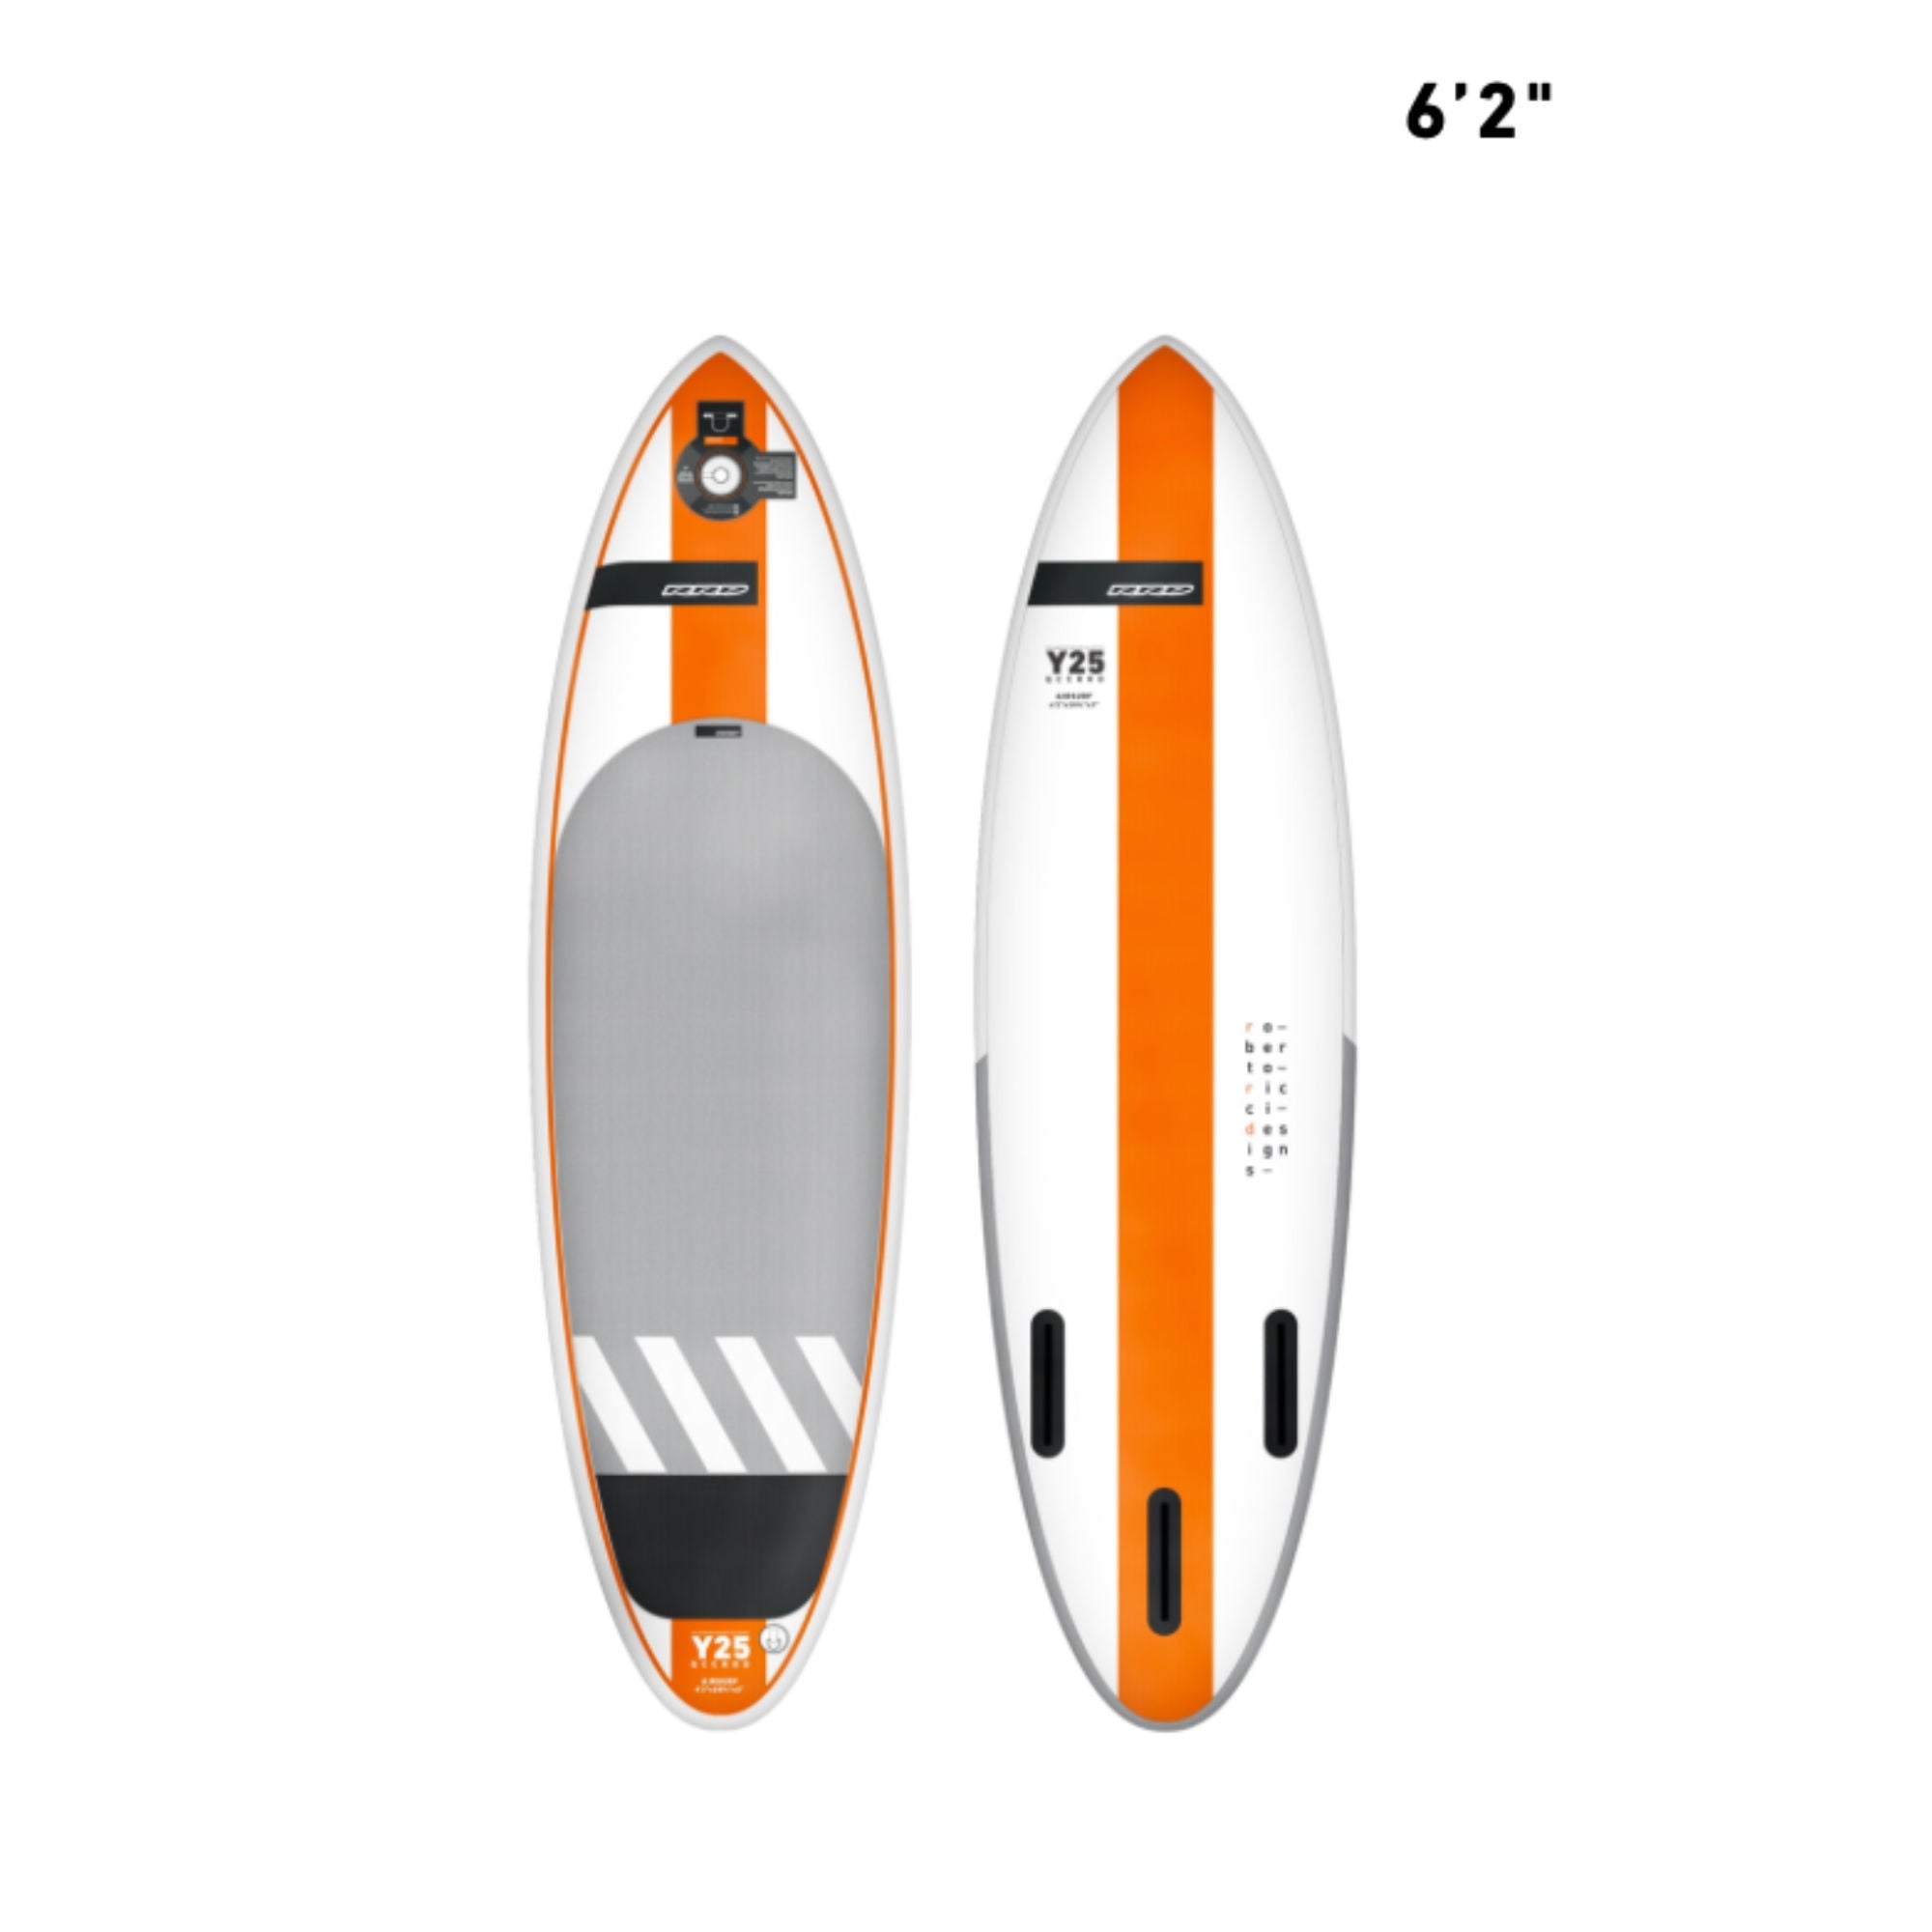 RRD Air Surf 6.2 - Inflatable Surfboard